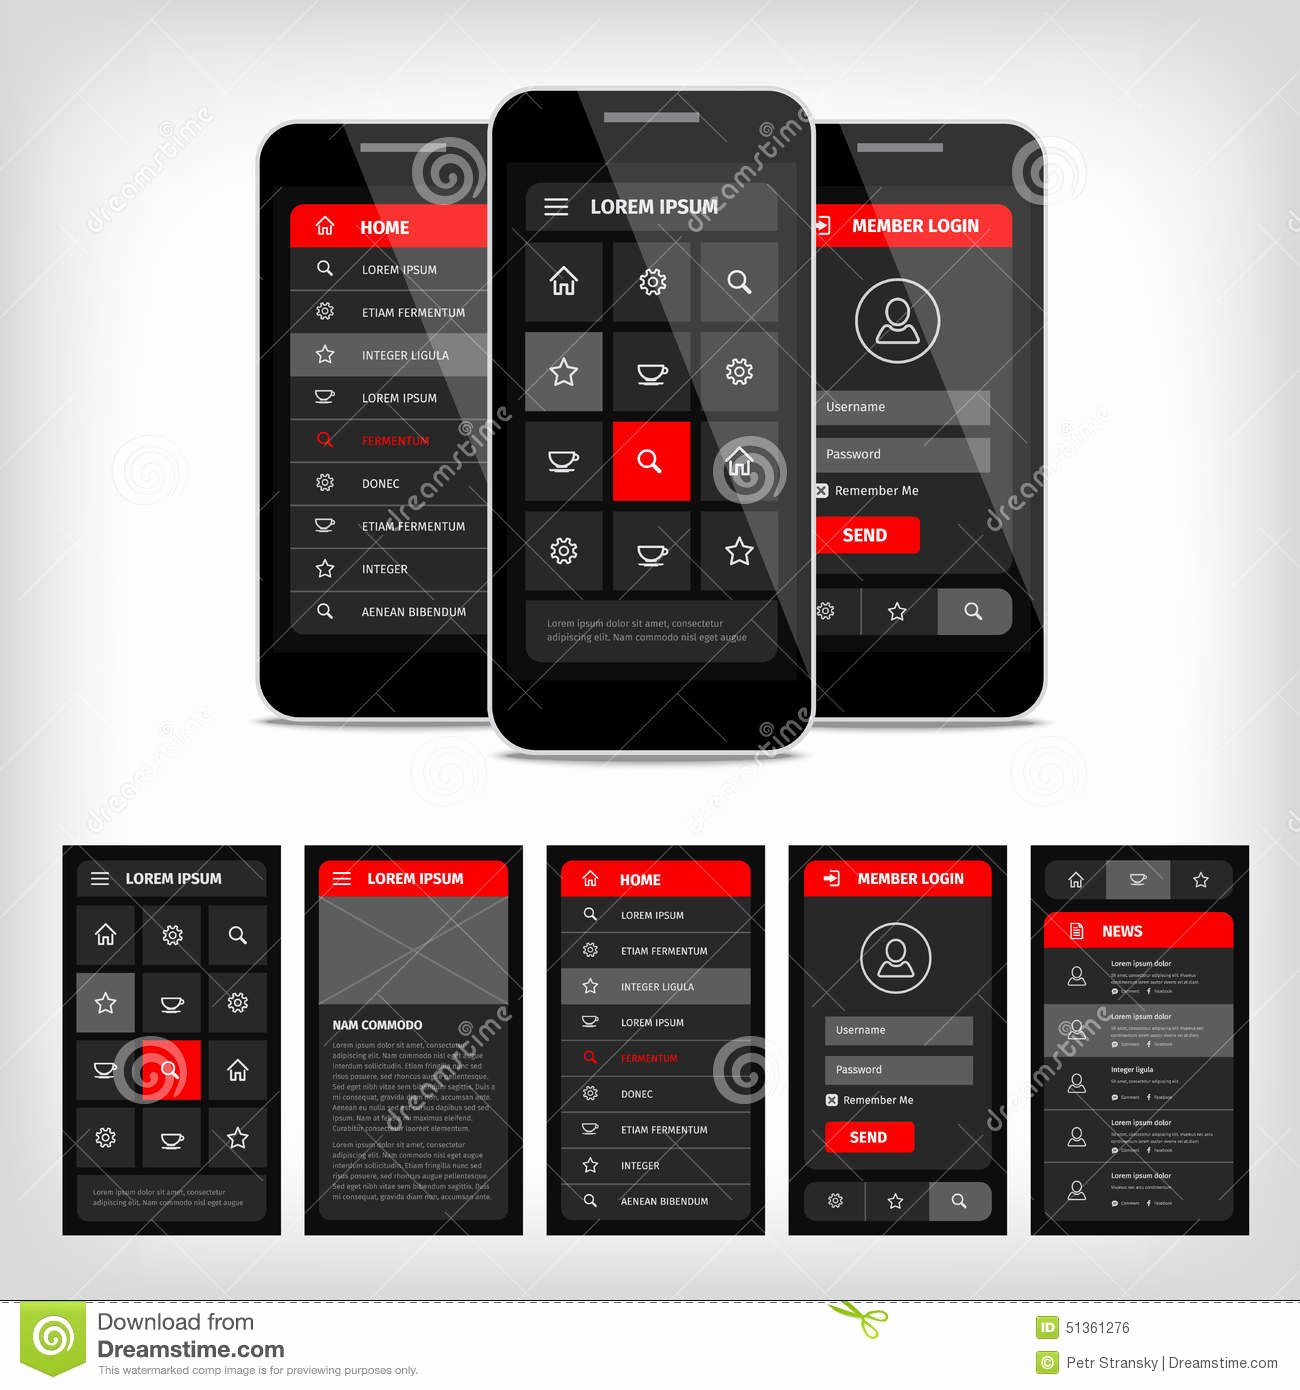 Mobile App Design Template Inspirational Vector Template Mobile User Interface Stock Vector Image